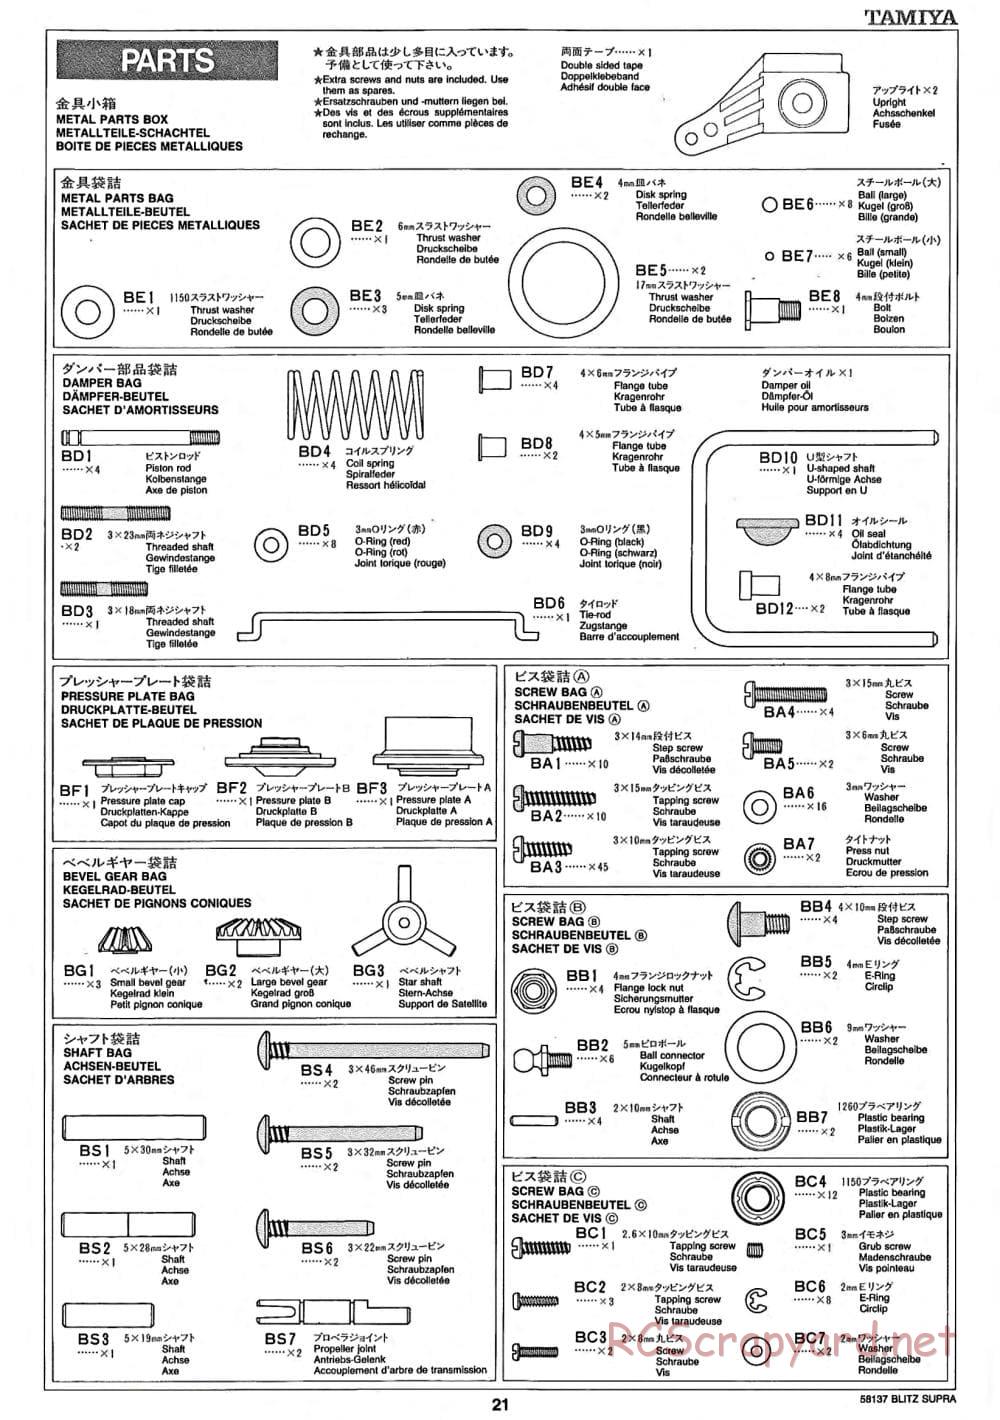 Tamiya - Blitz Toyota Supra Gr.N - TA-02 Chassis - Manual - Page 21